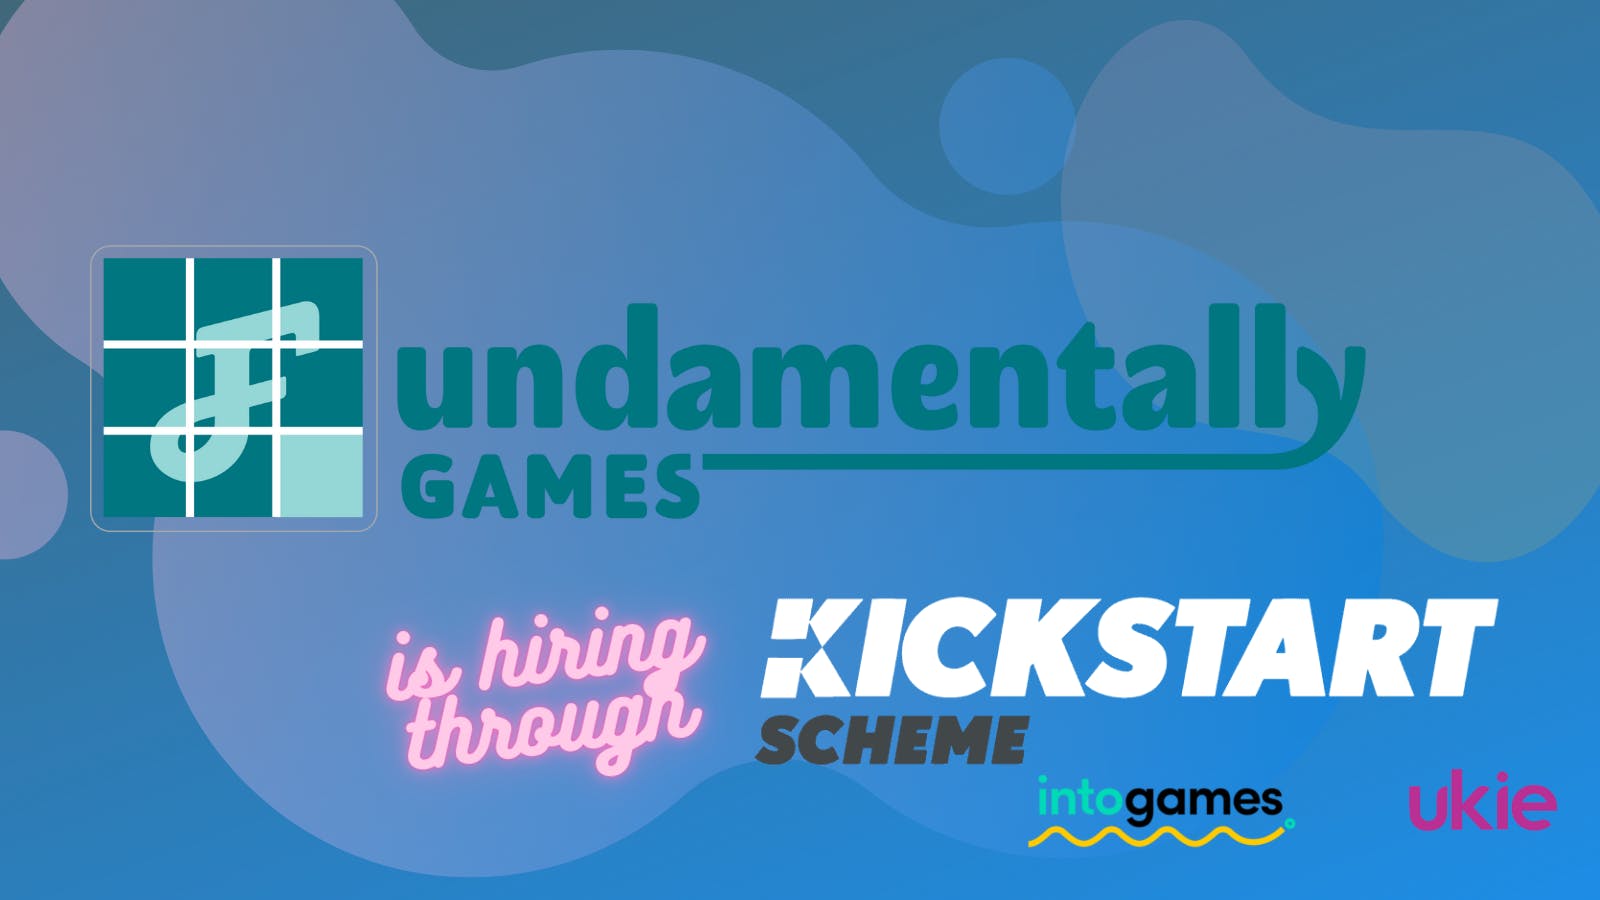 Fundamentally Games - We're Hiring Through the Kickstart Scheme